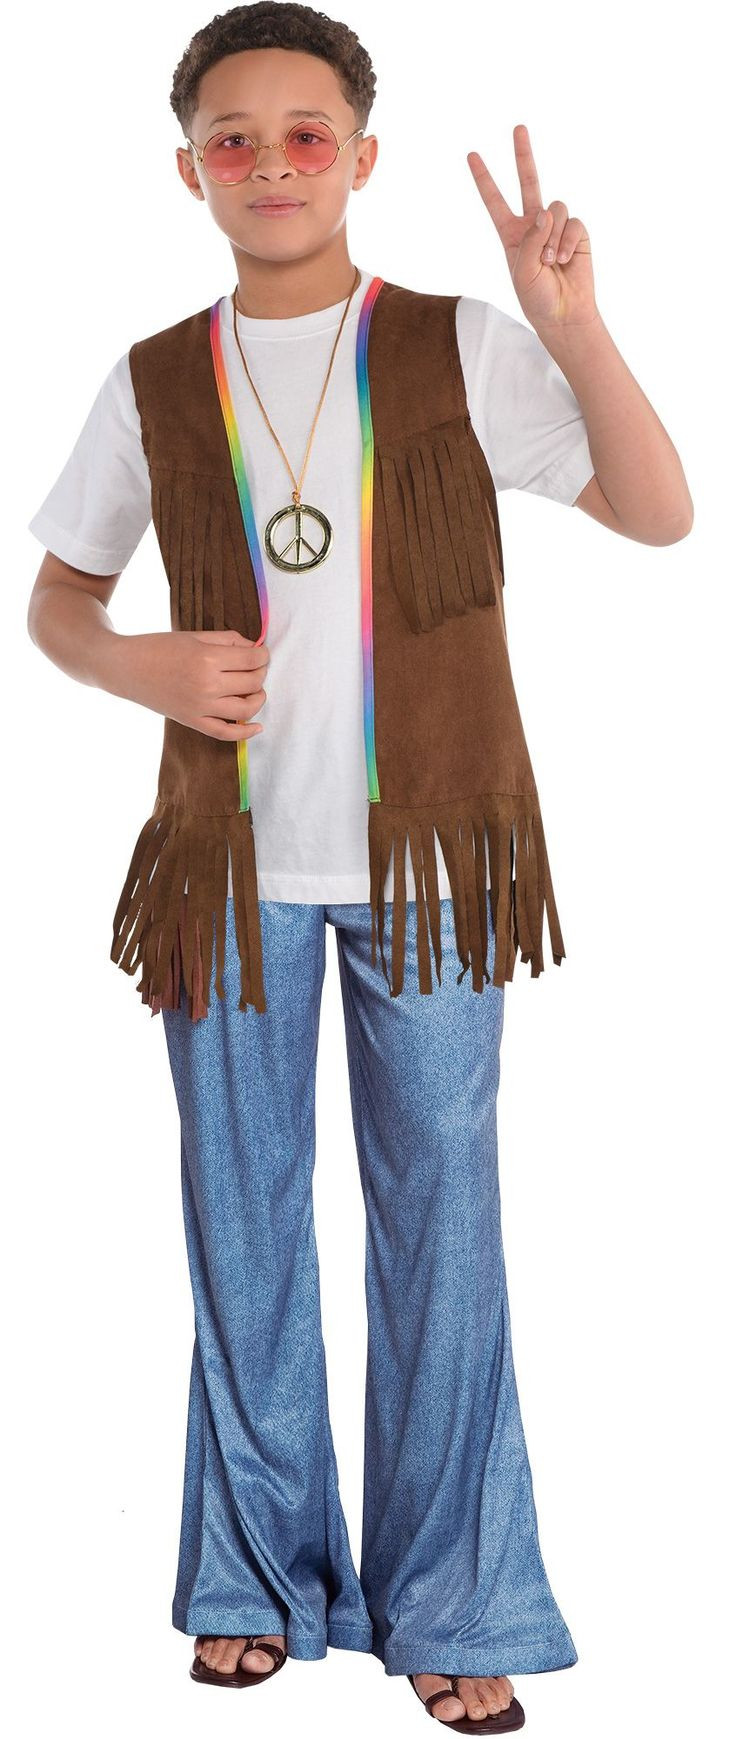 70S Dress Up Ideas For Kids
 DIY Hippie costume for H Pinterest